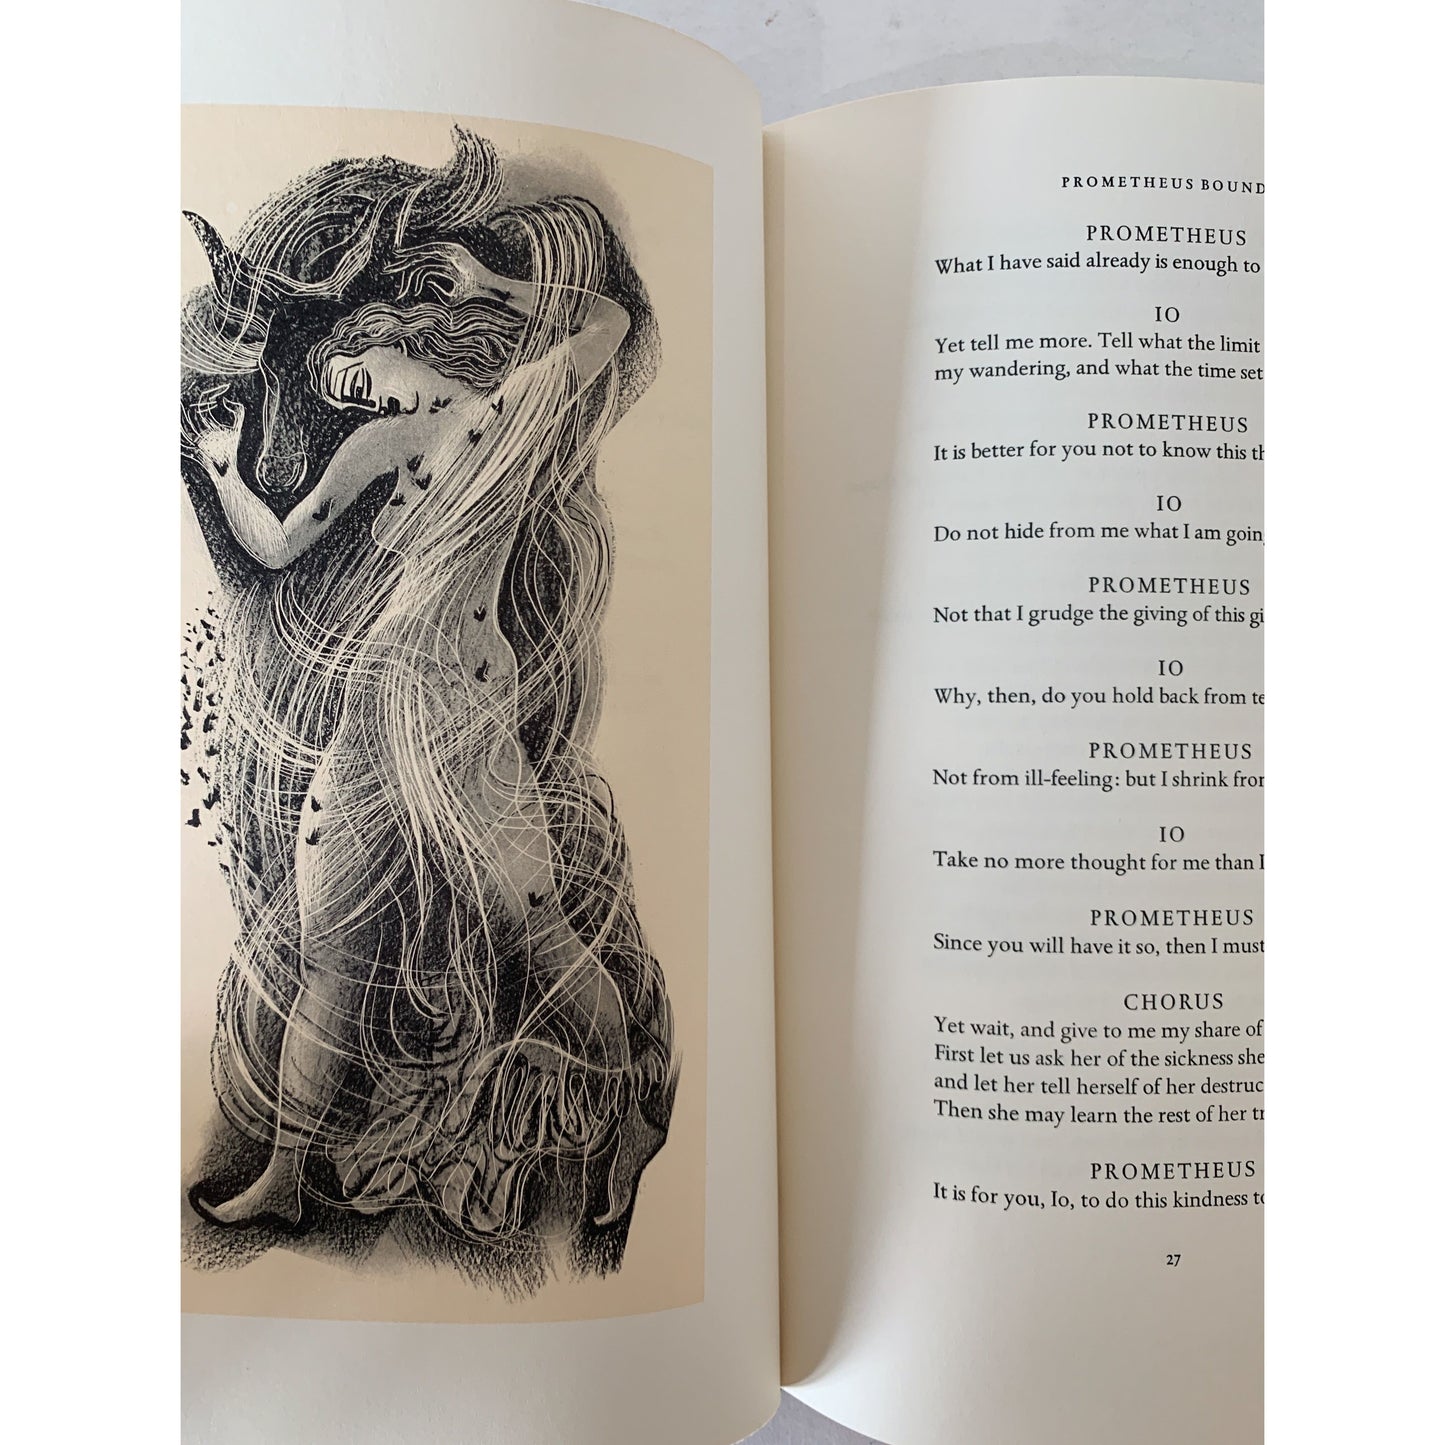 Prometheus Bound/Prometheus Unbound, Aeschylus/Shelley, Heritage Press, 1966, Illustrated